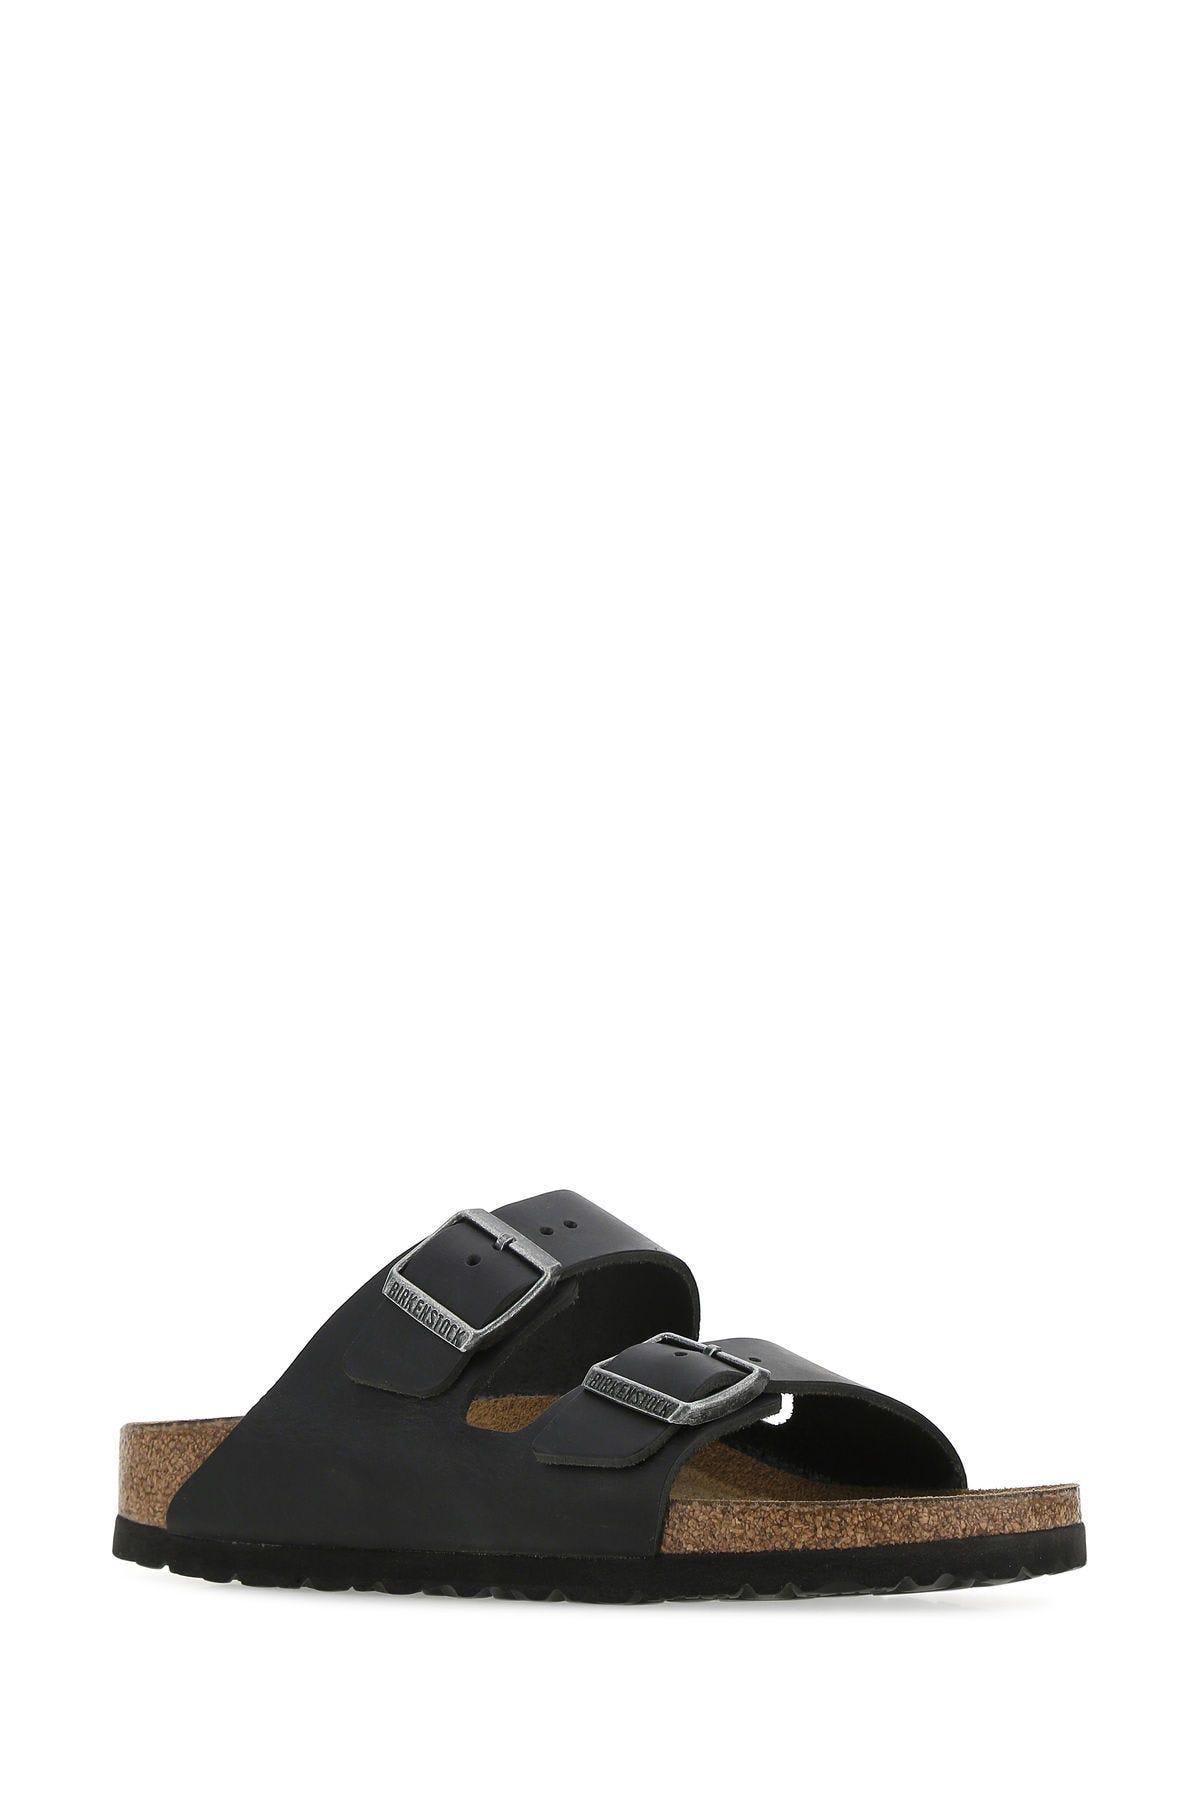 Shop Birkenstock Black Leather Arizona Slippers